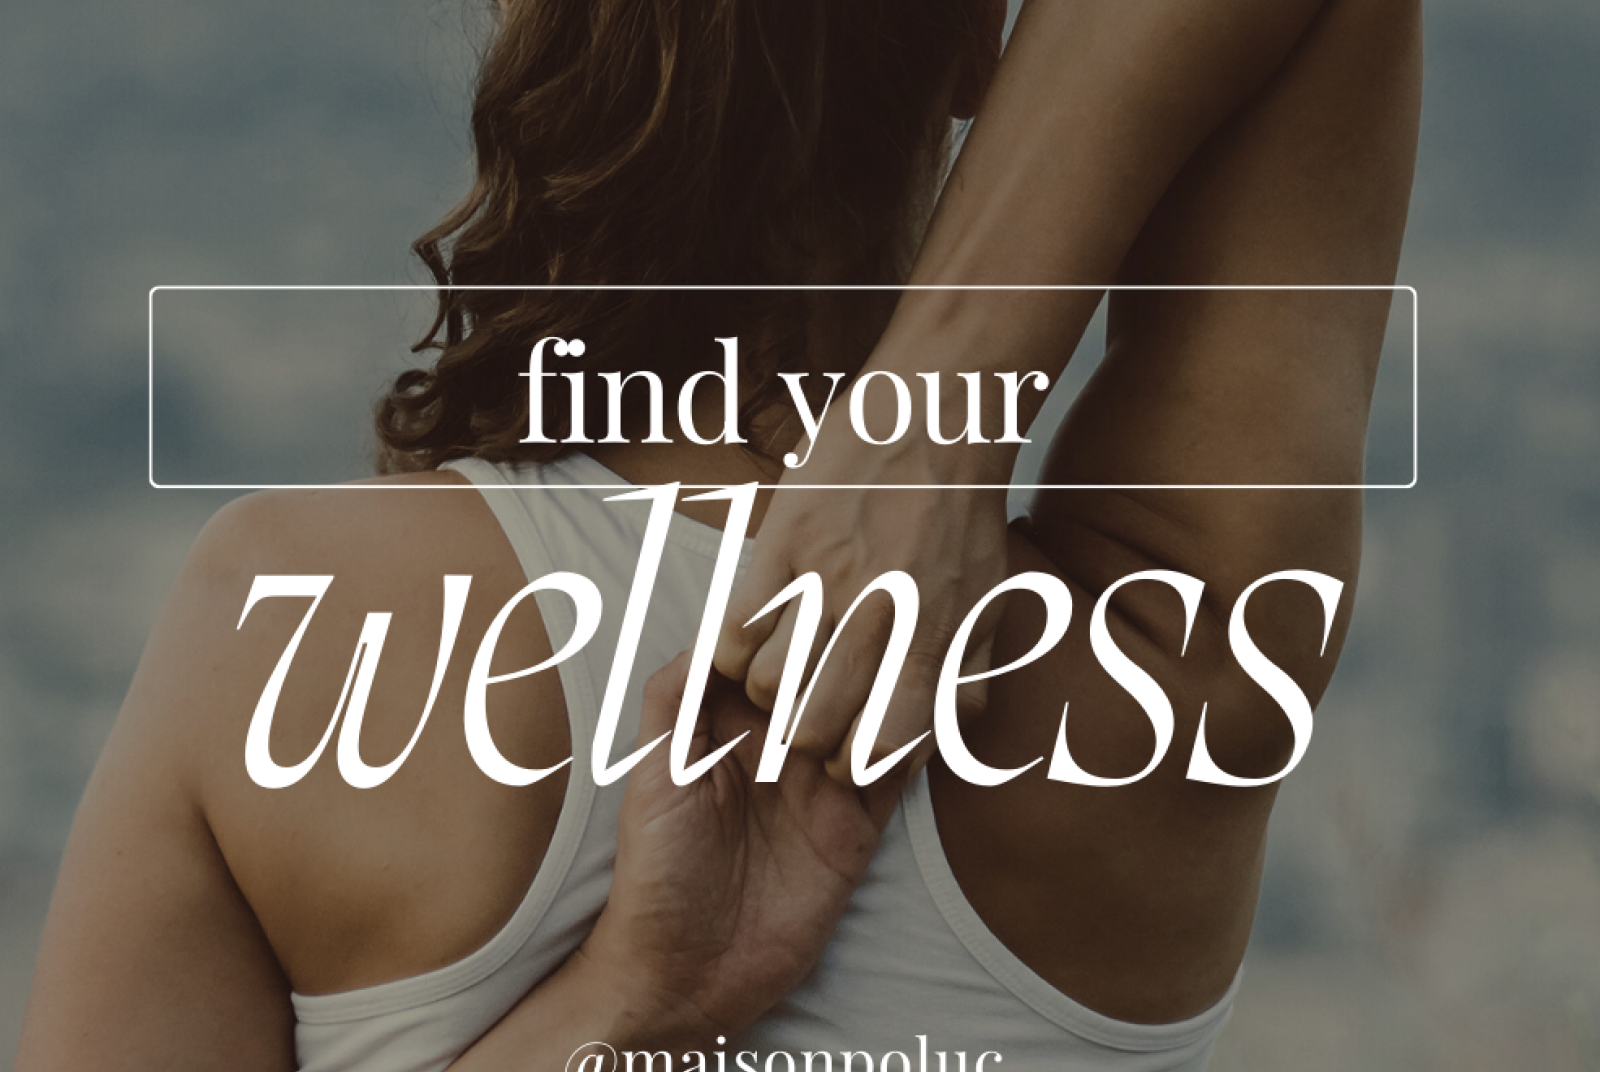 Find your Wellness - Maison Poluc